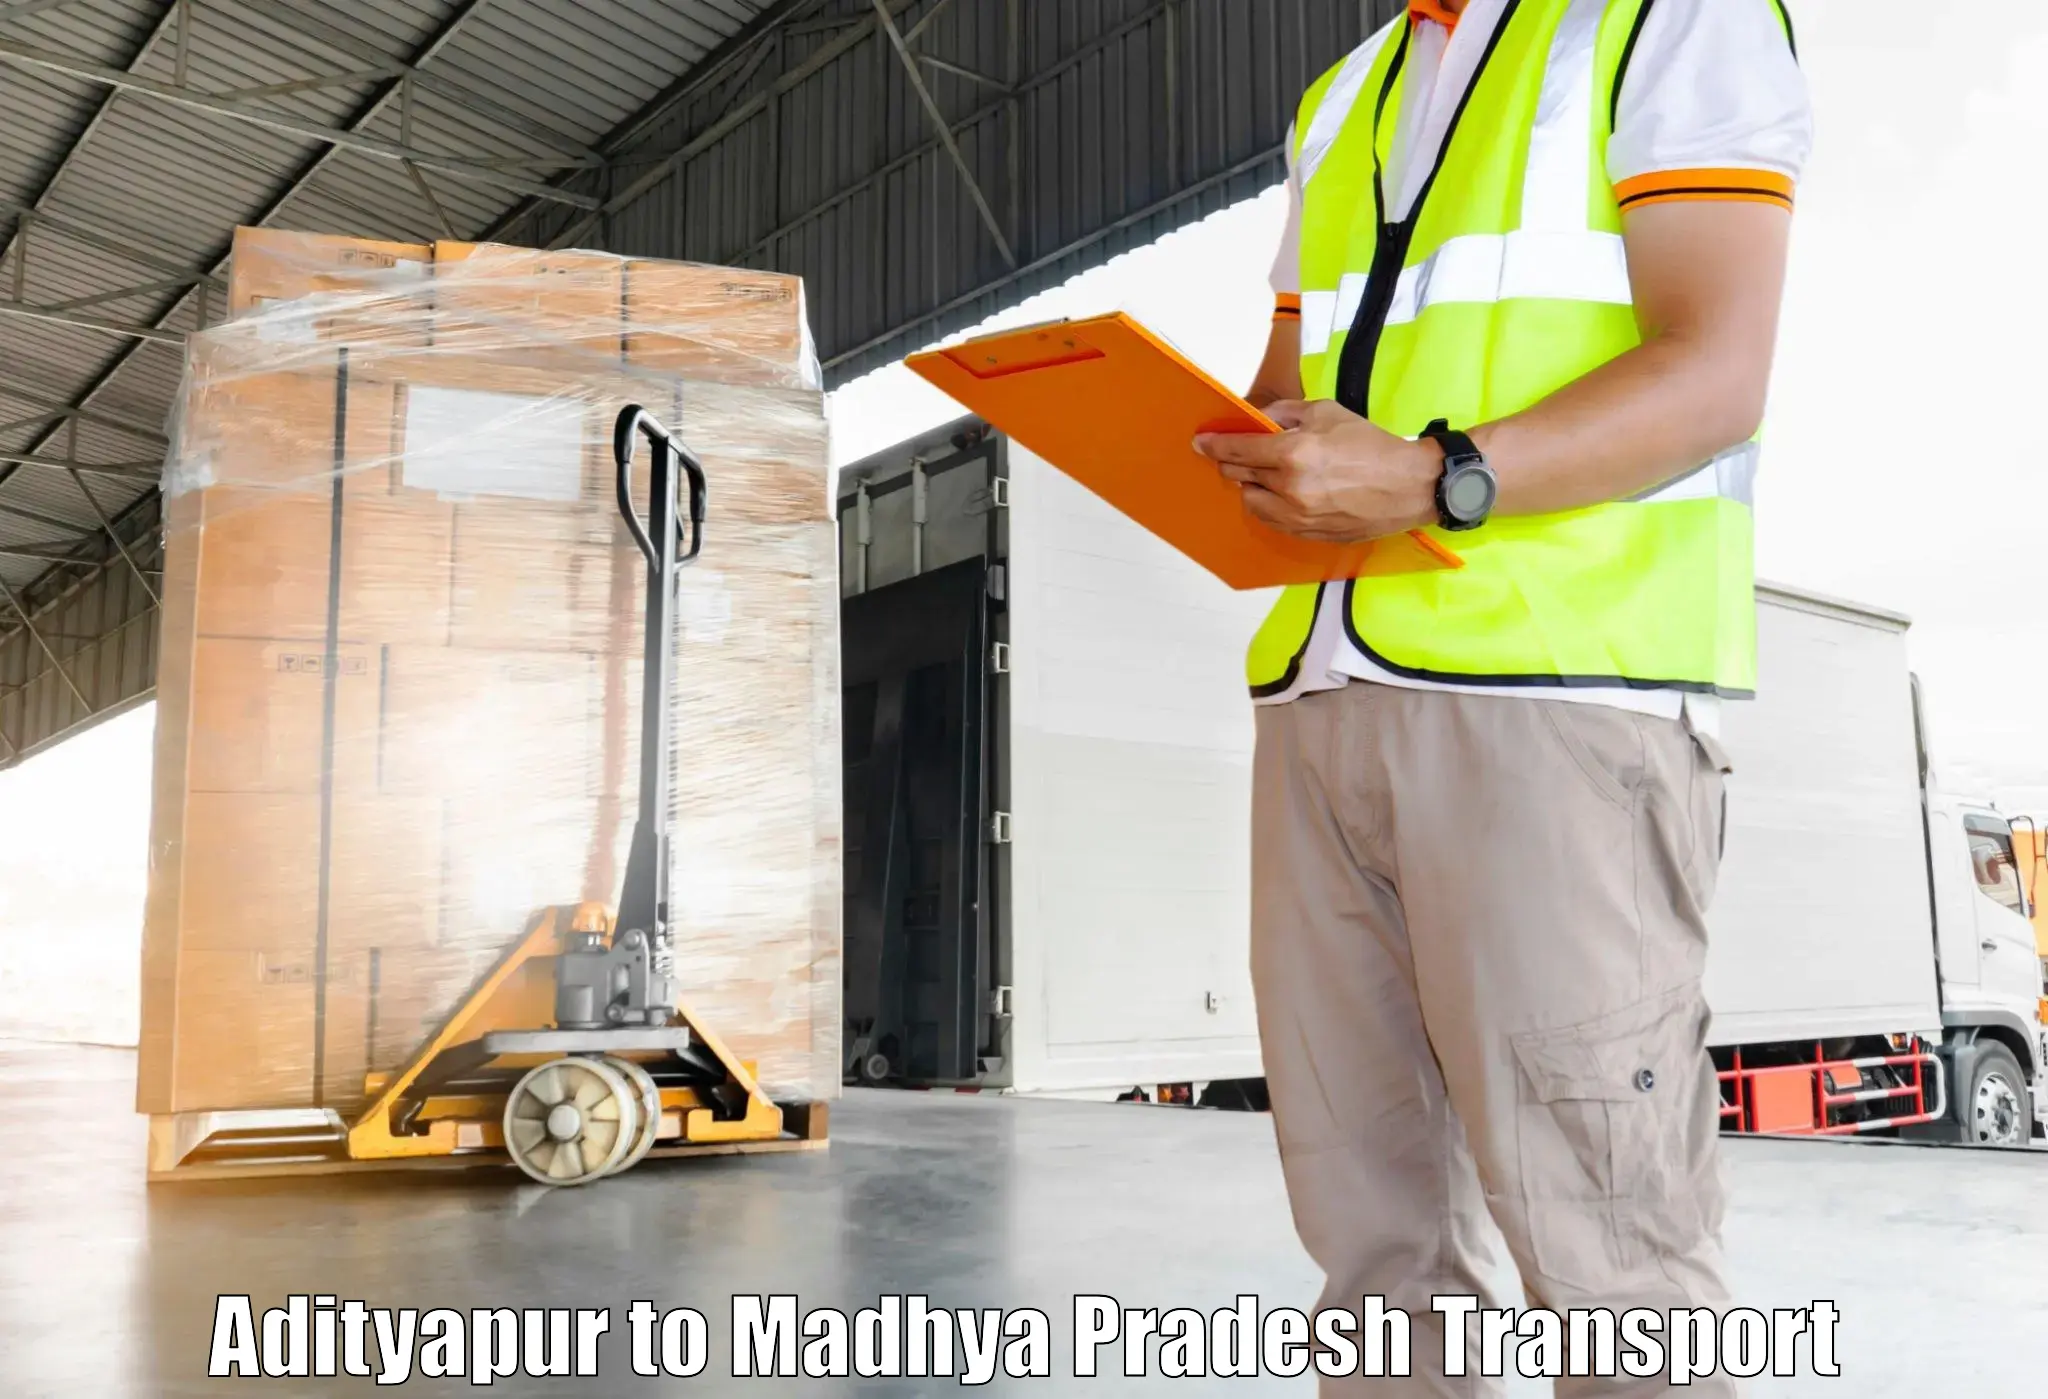 Shipping partner Adityapur to Pithampur